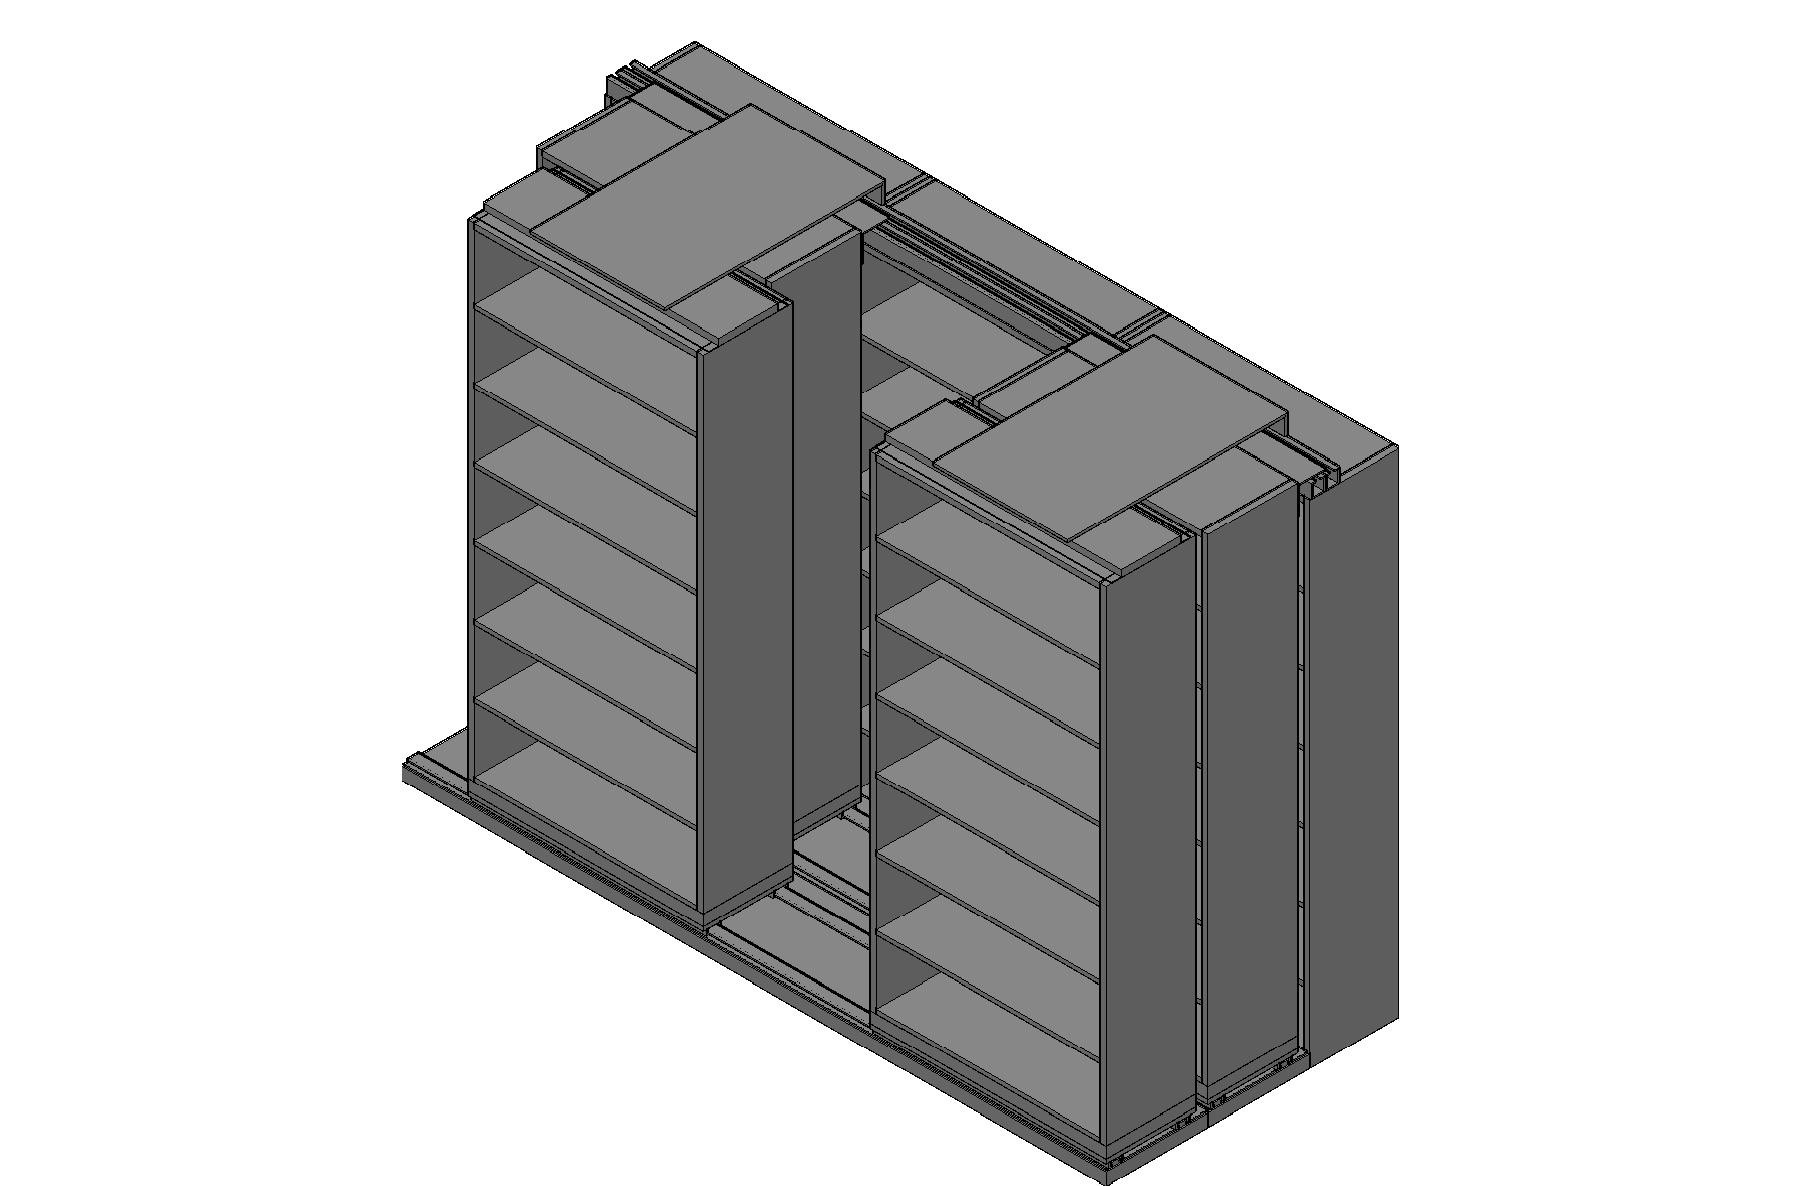 Box Size Sliding Shelves - 3 Rows Deep - 7 Levels - (42" x 16" Shelves) - 130" Total Width